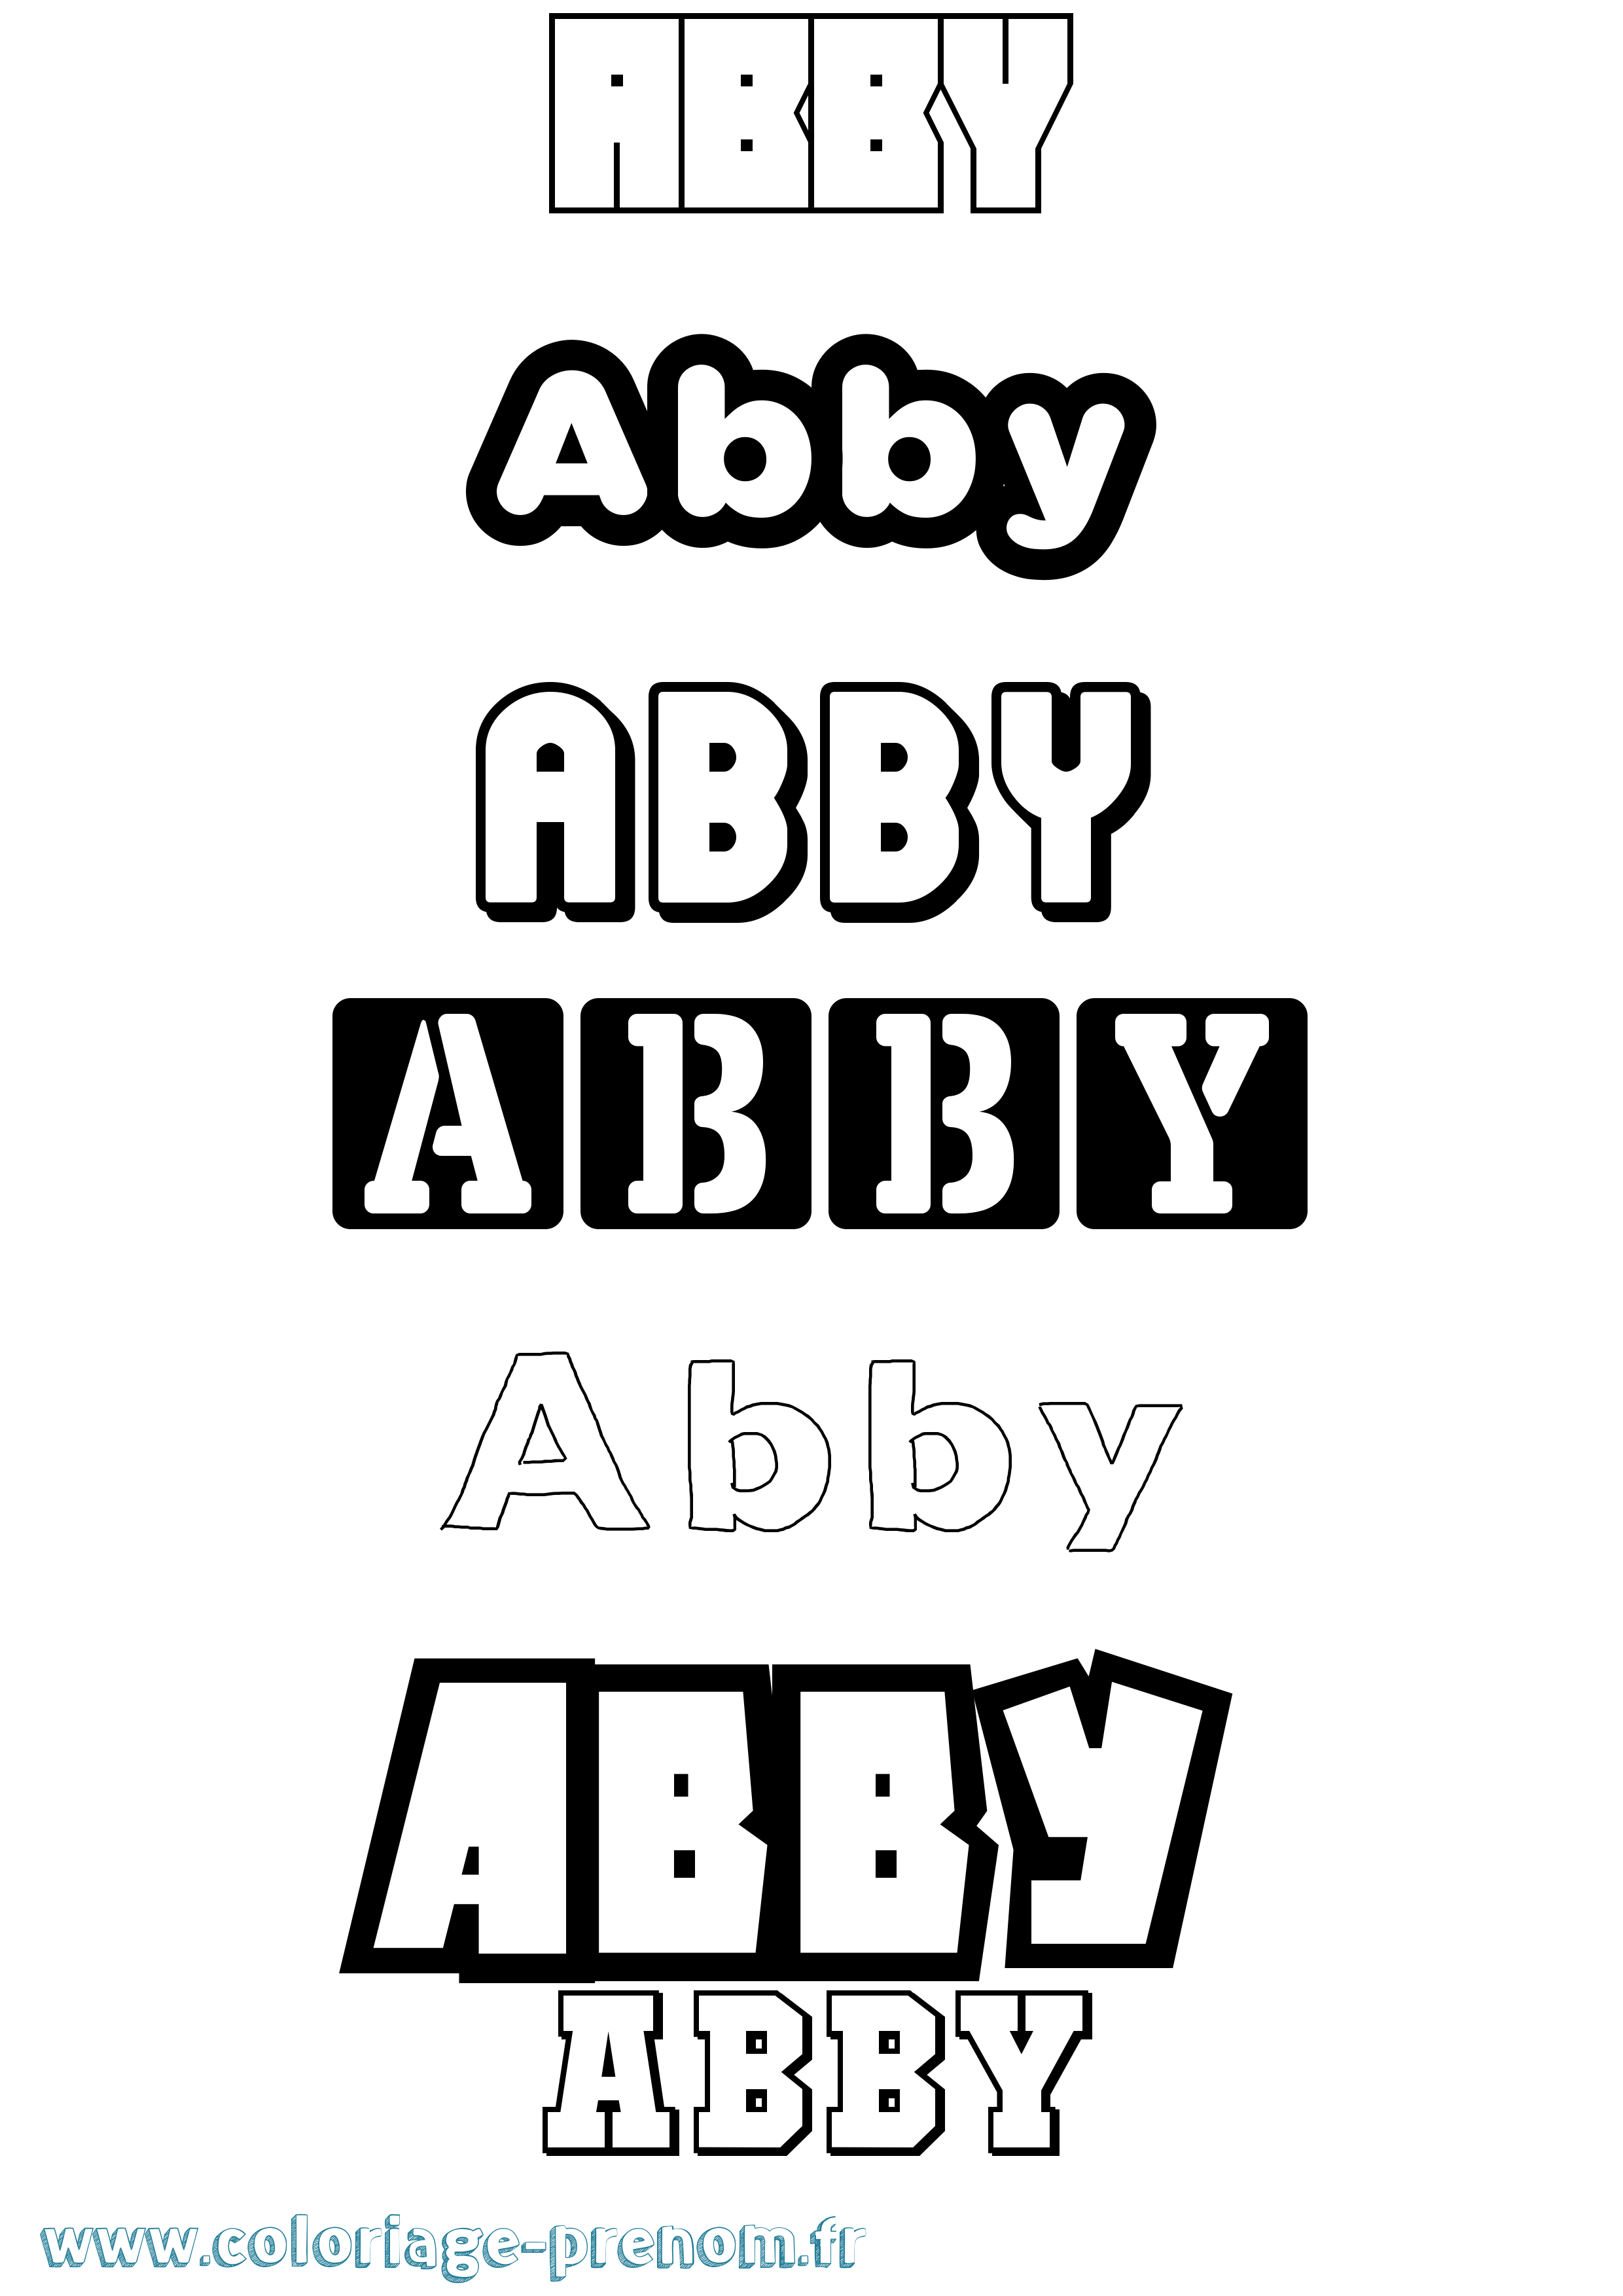 Coloriage prénom Abby Simple